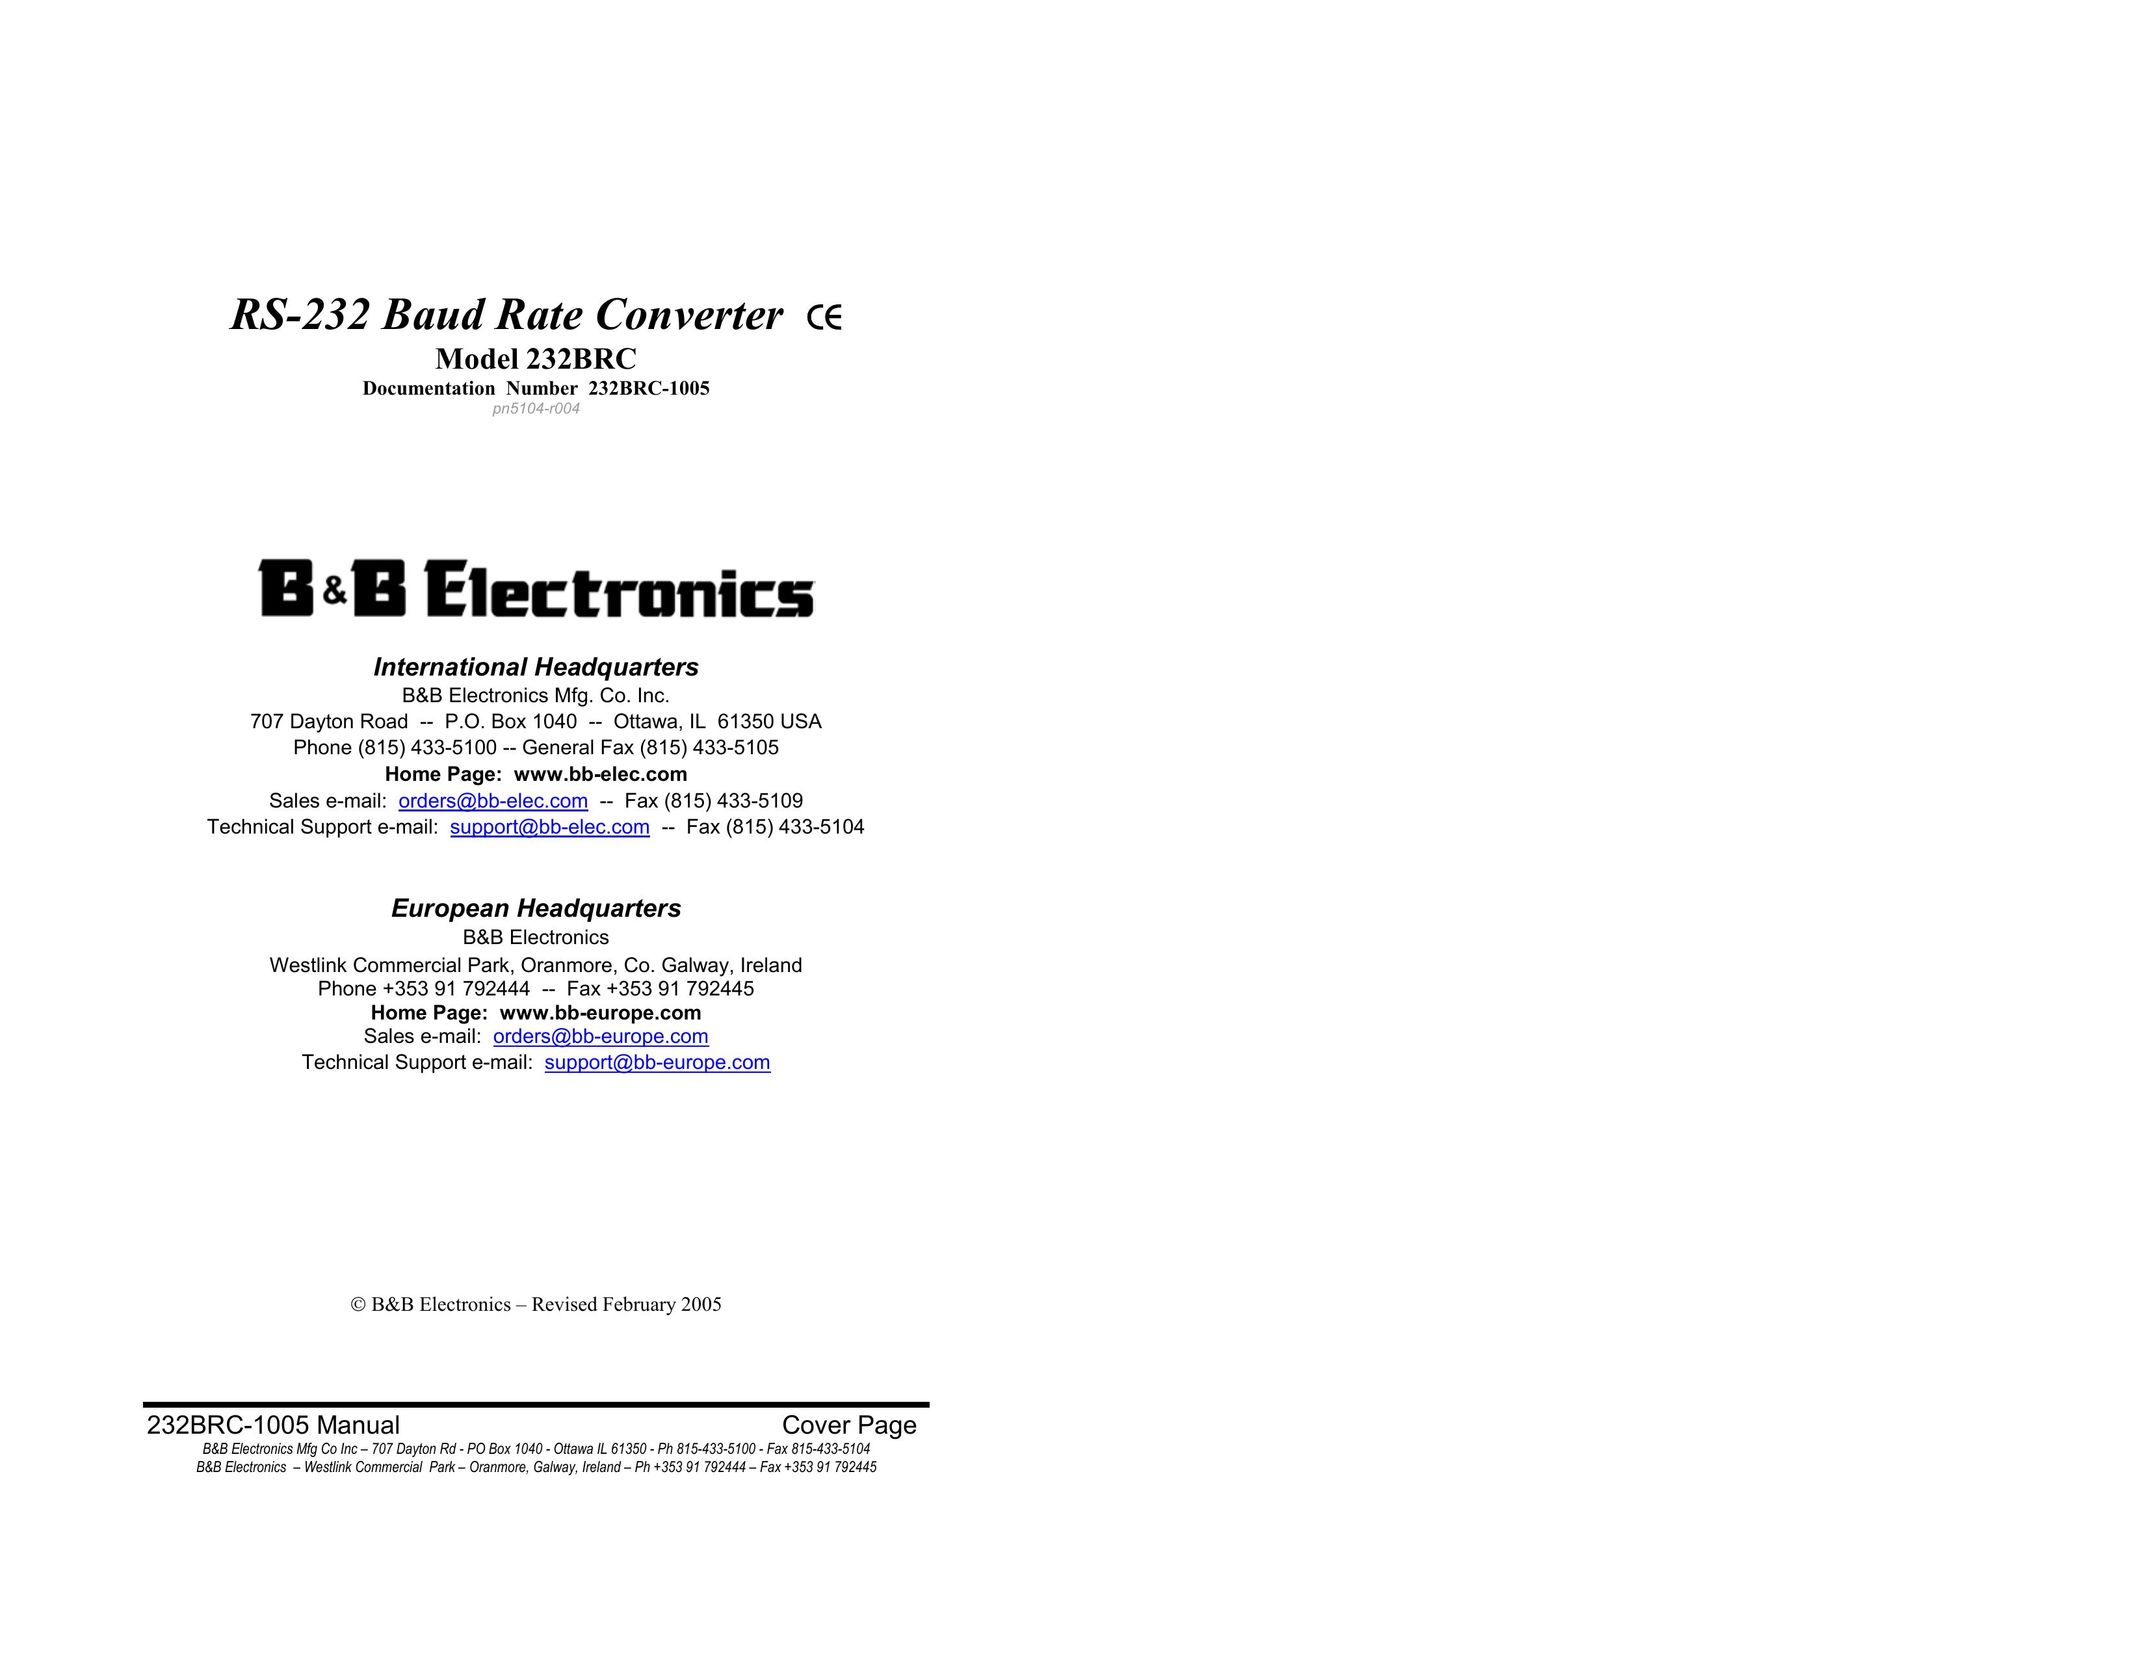 B&B Electronics 232BRC Switch User Manual